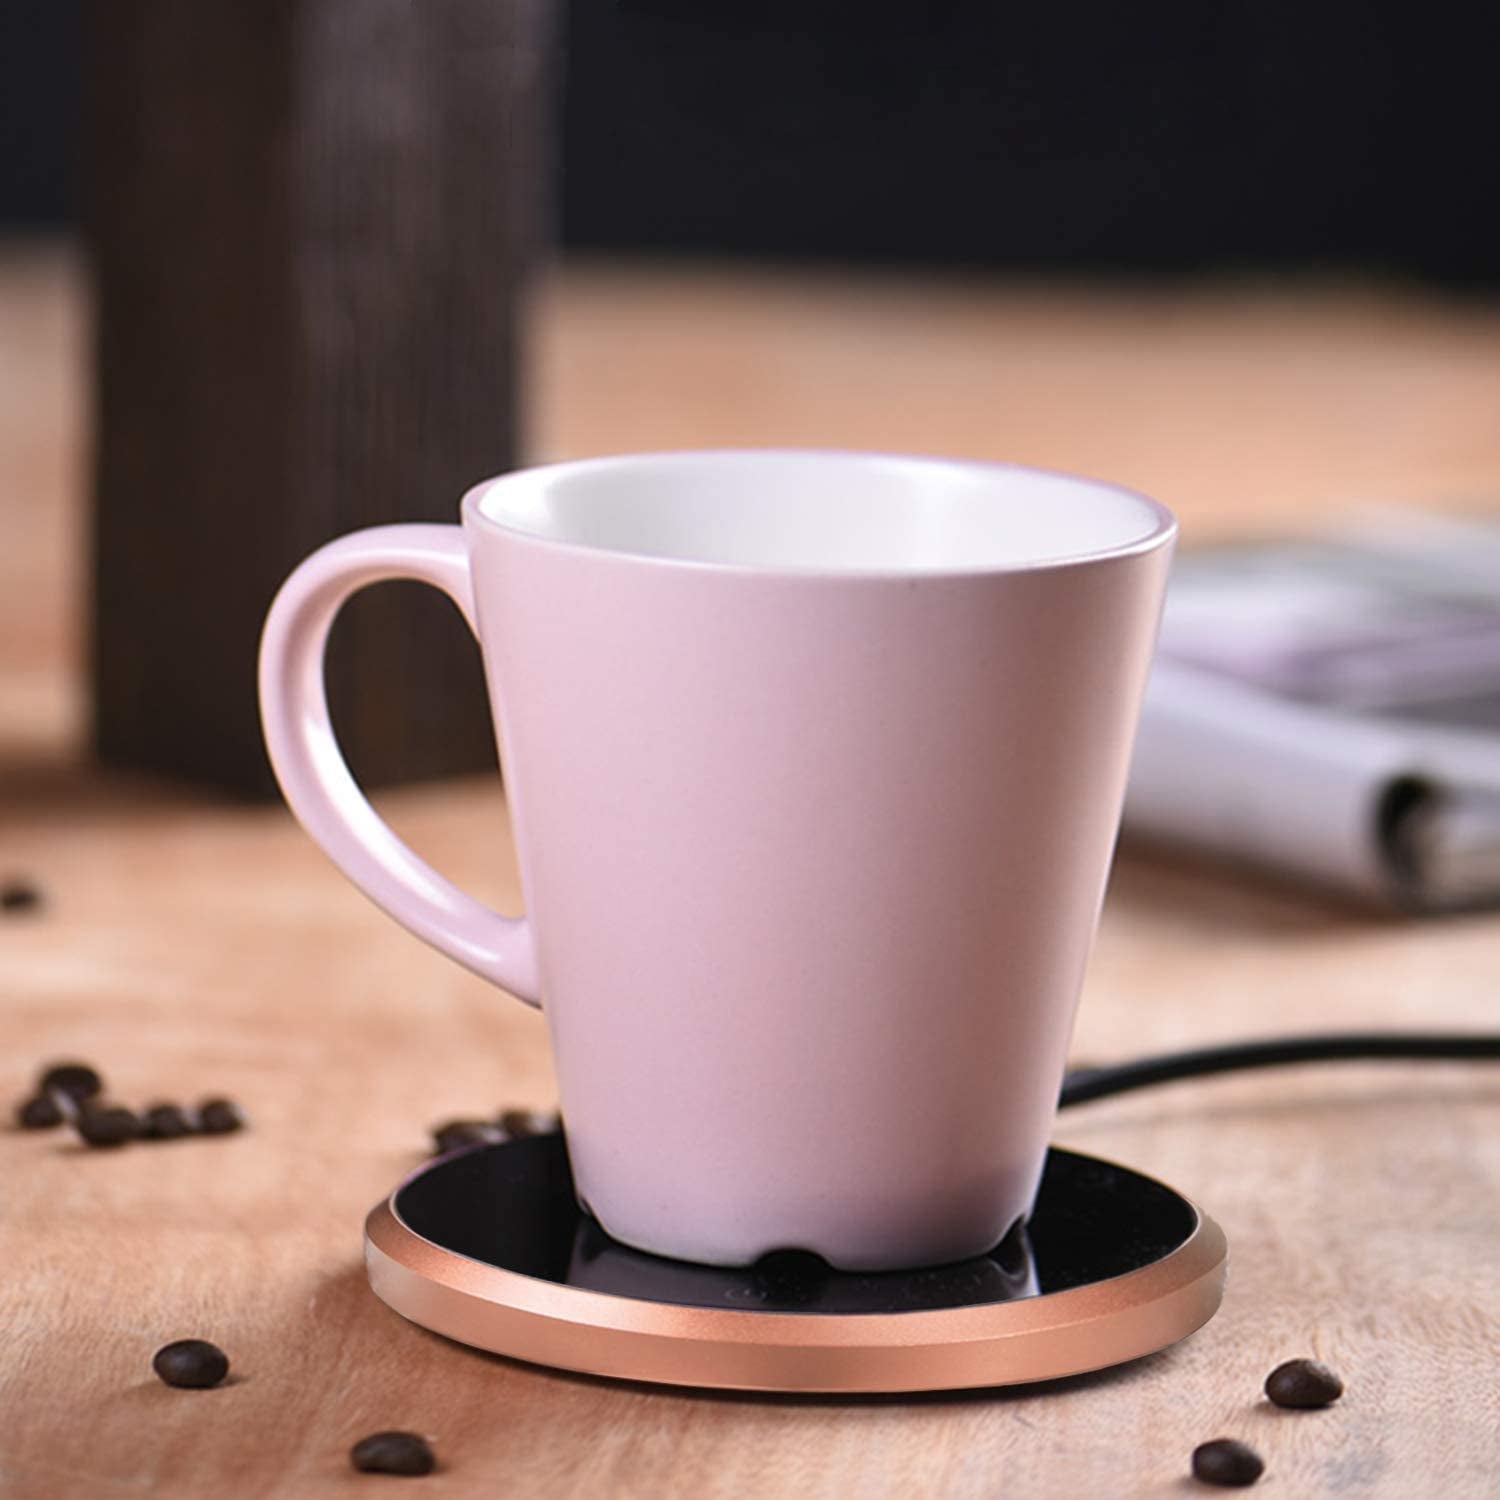 Auto Coffee Mug Warmer 